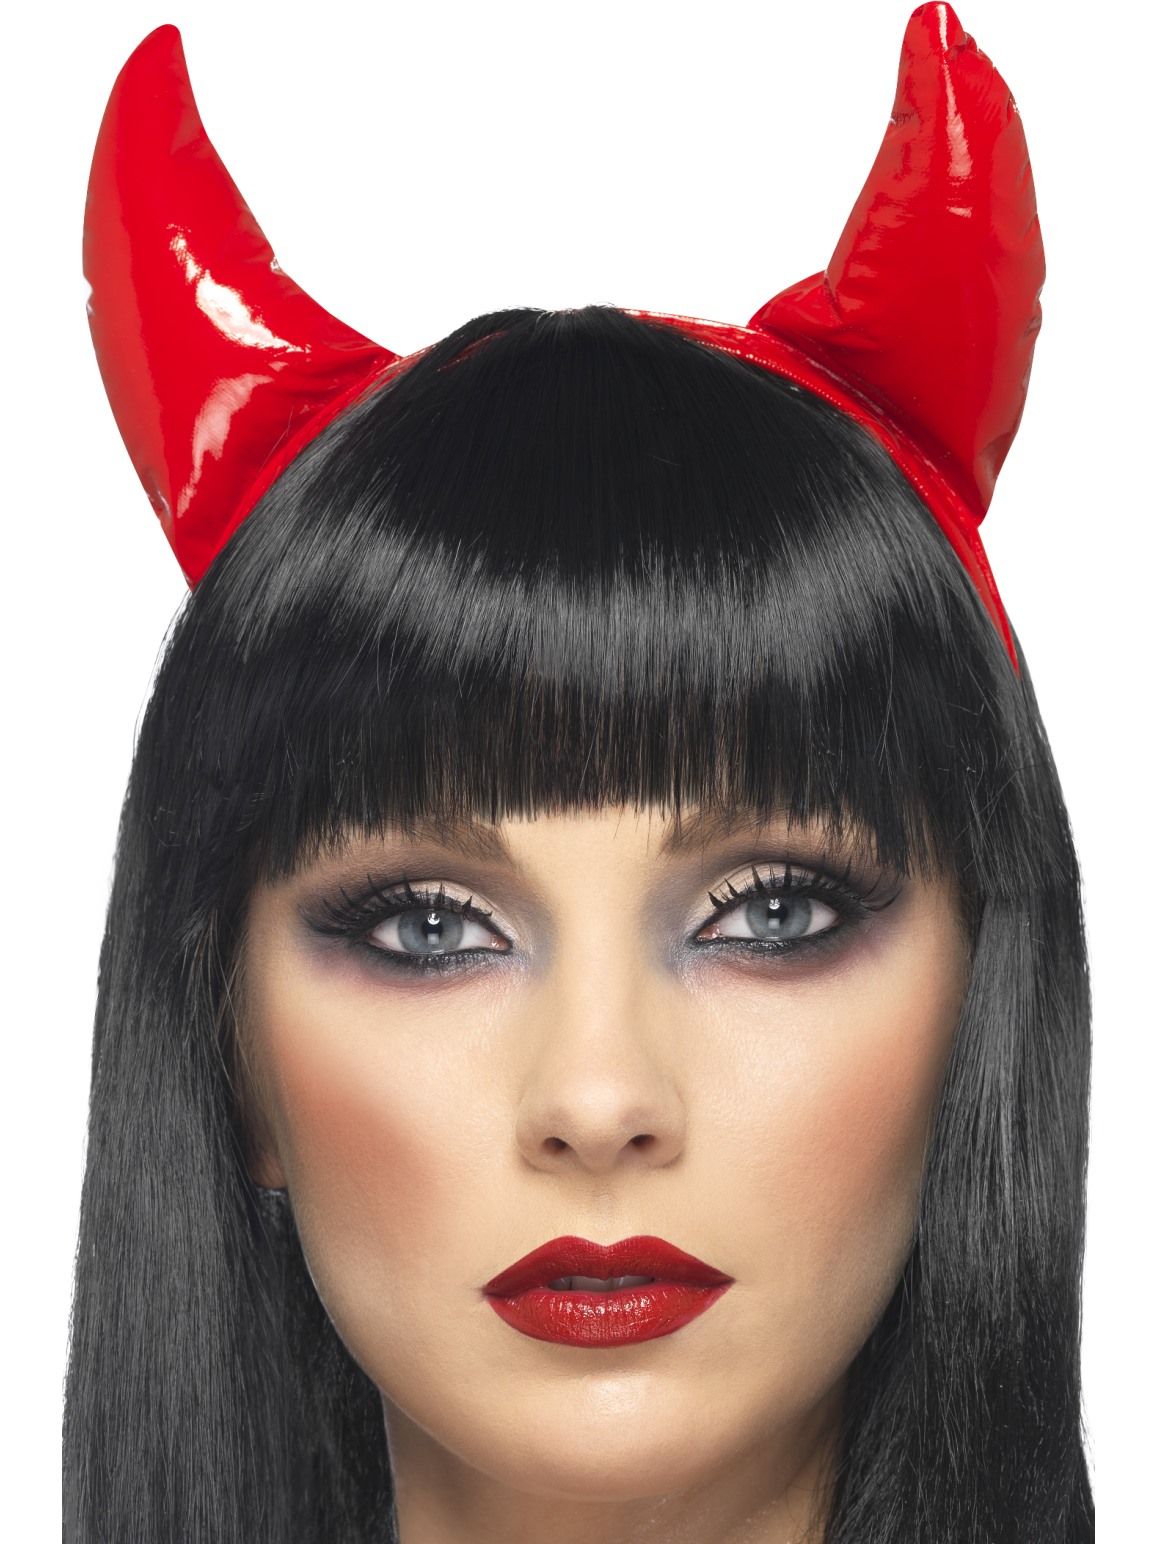 Red PVC Devil Horns on Headband Sexy Costume Accessory